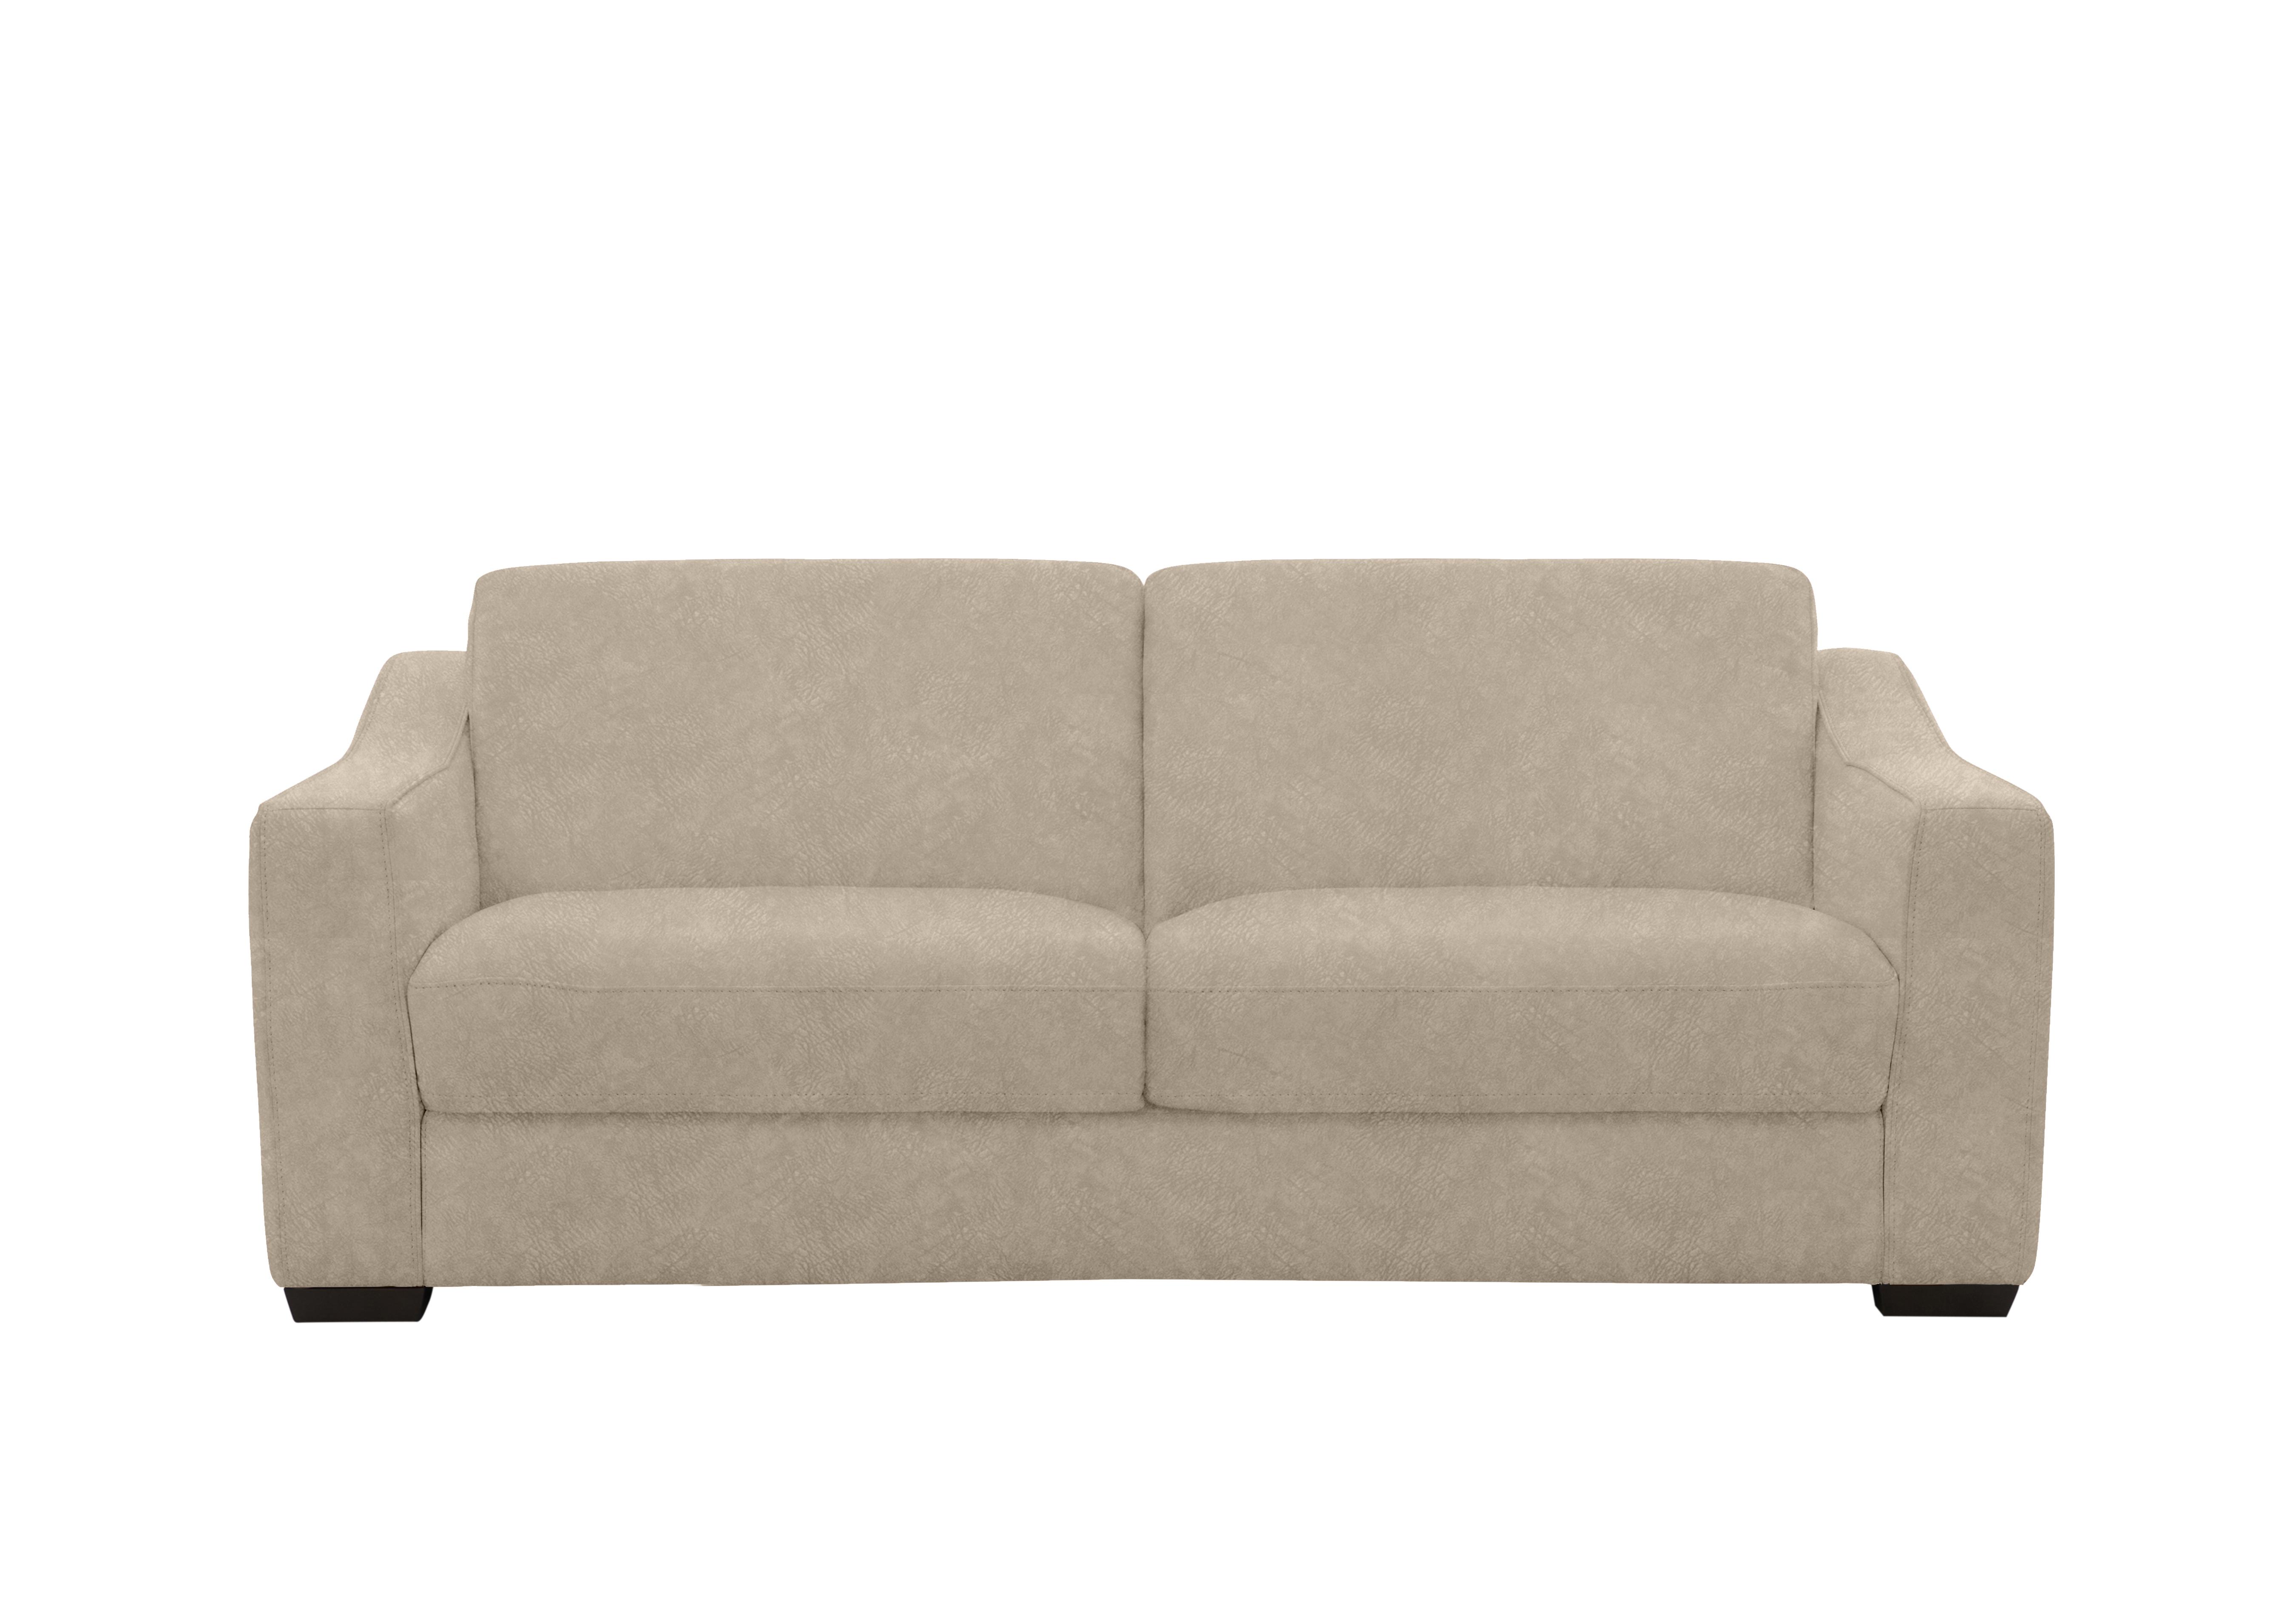 Optimus 3 Seater Fabric Sofa in Bfa-Bnn-R26 Fv2 Cream on Furniture Village